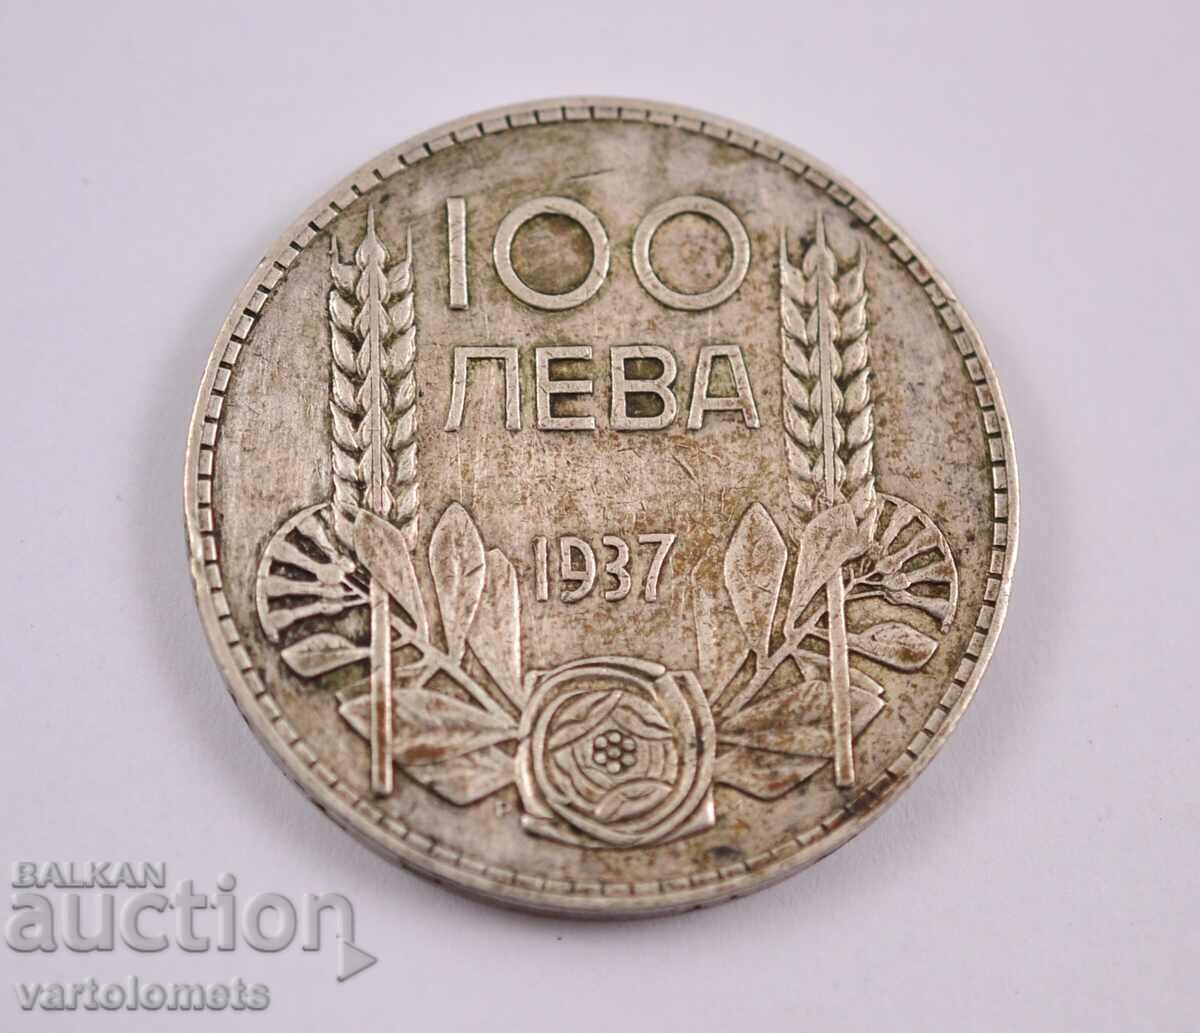 BGN 100 1937 - Bulgaria